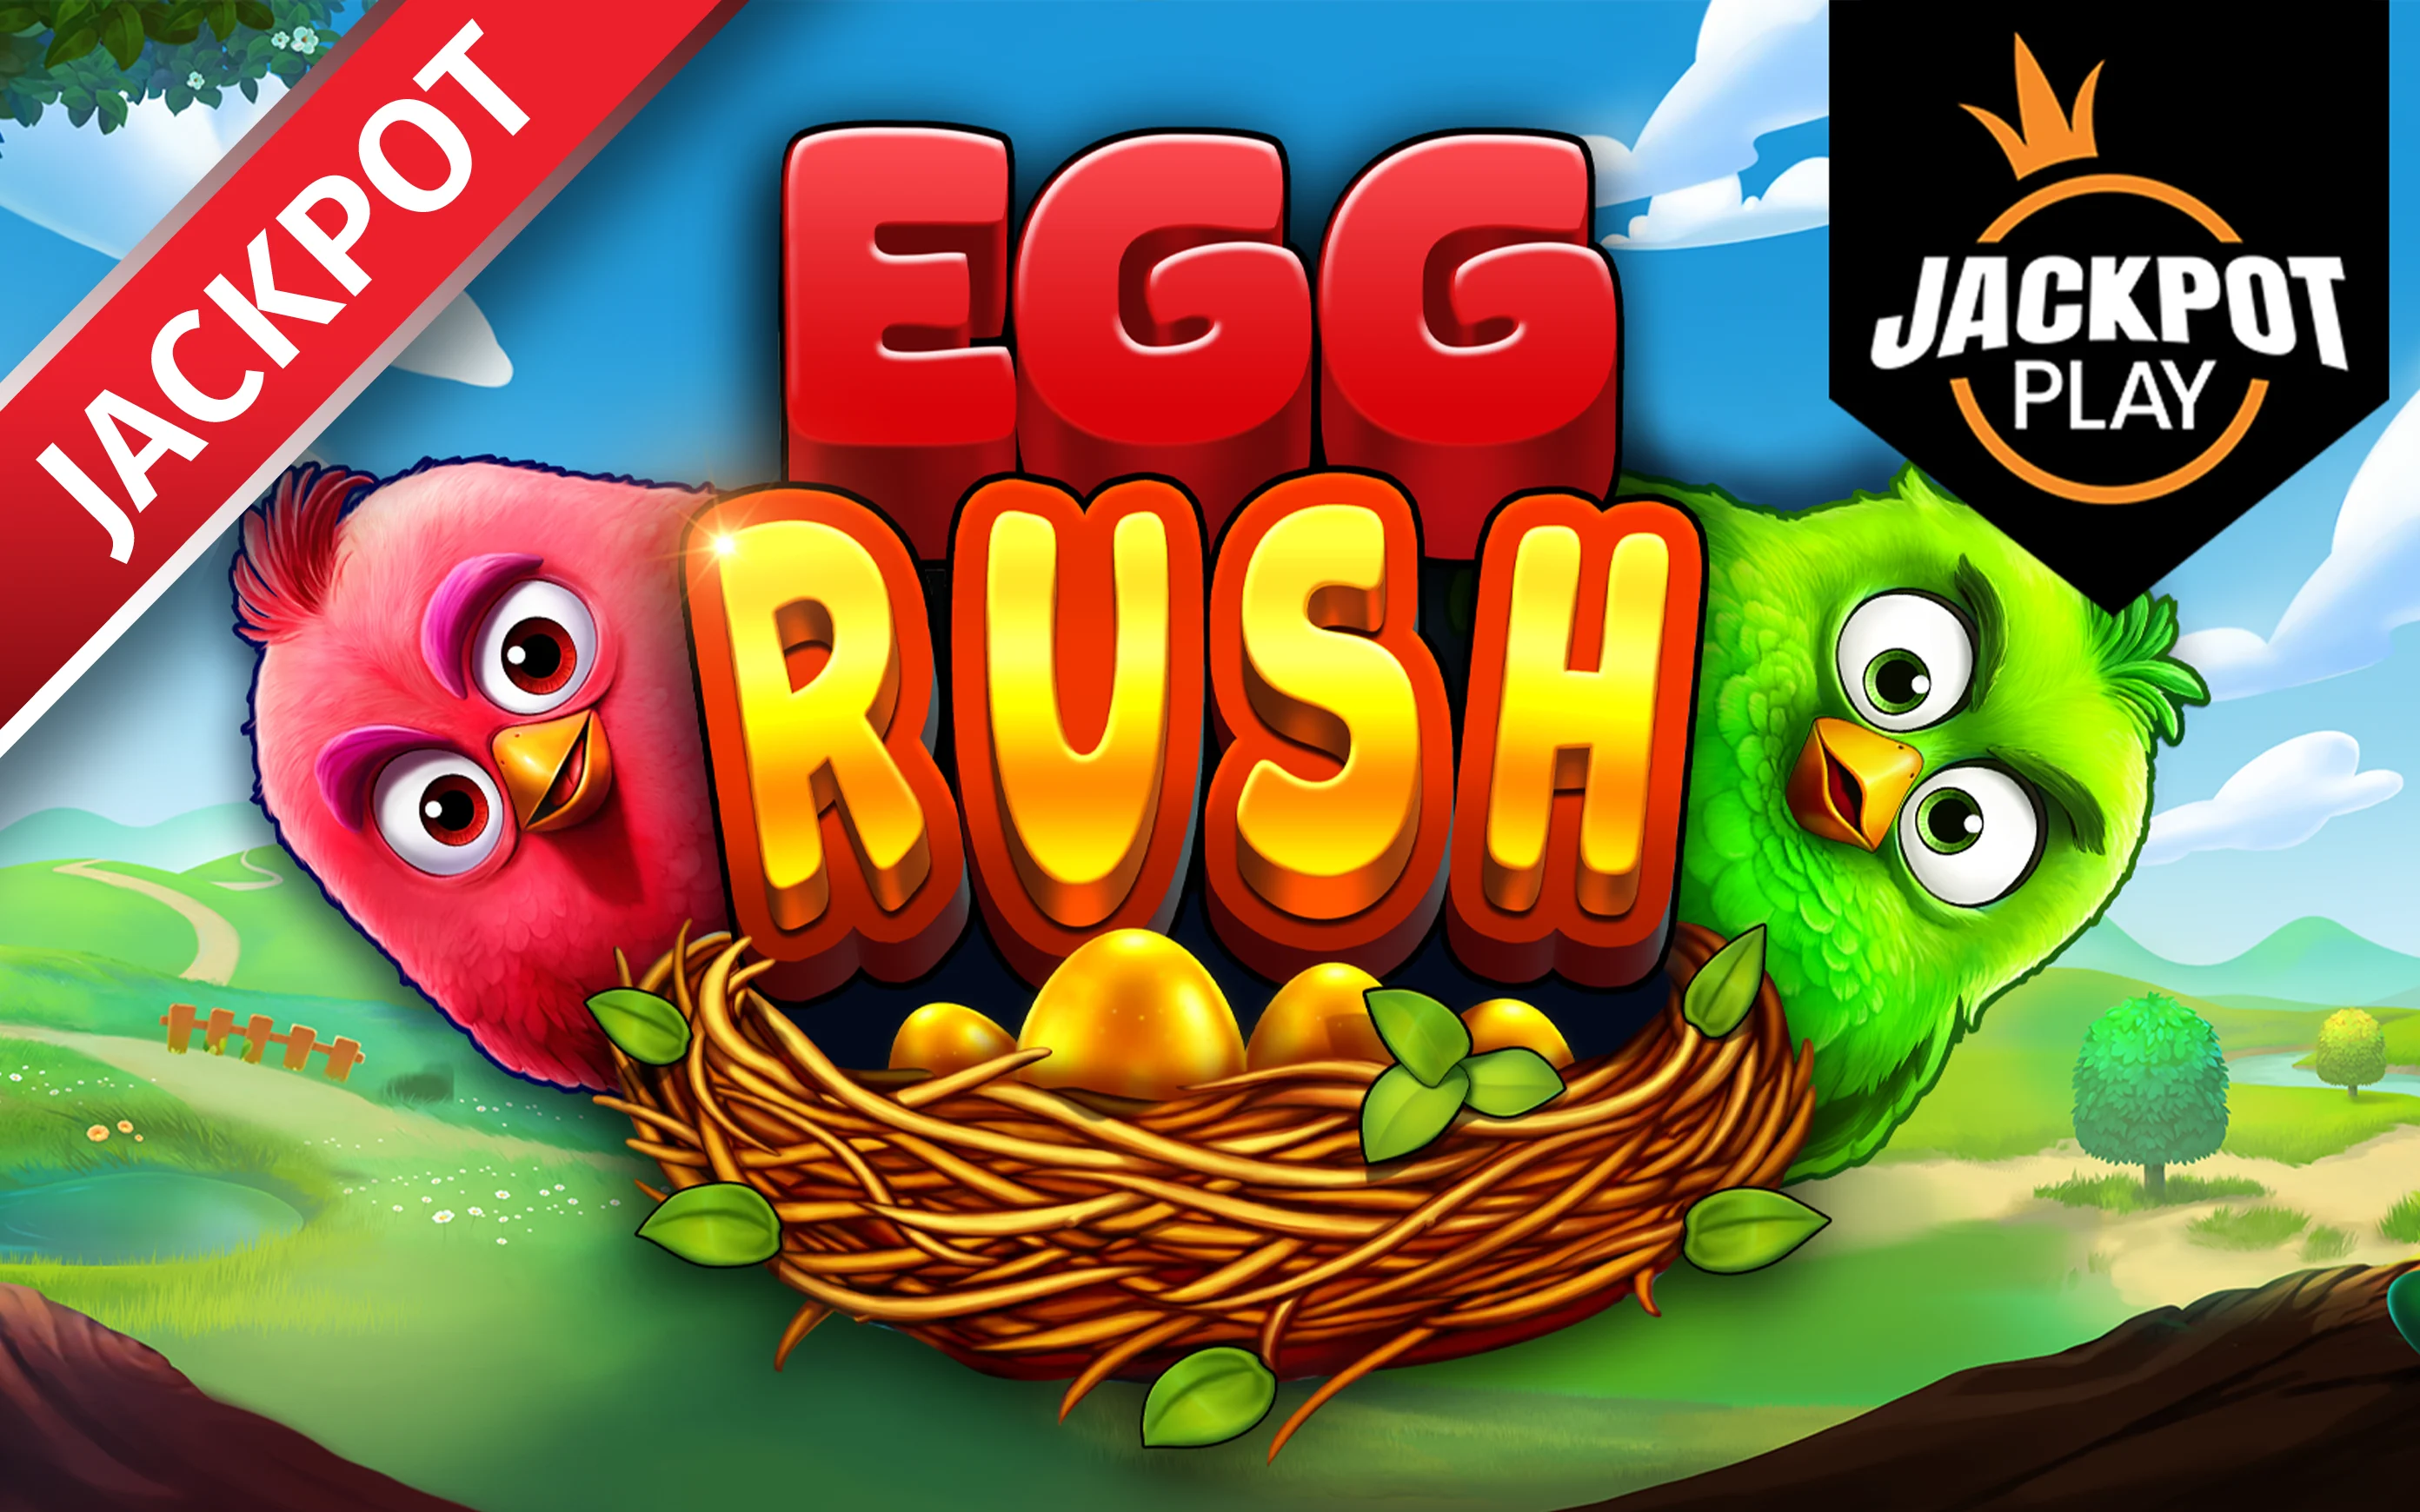 Speel Egg Rush Jackpot Play op Starcasino.be online casino